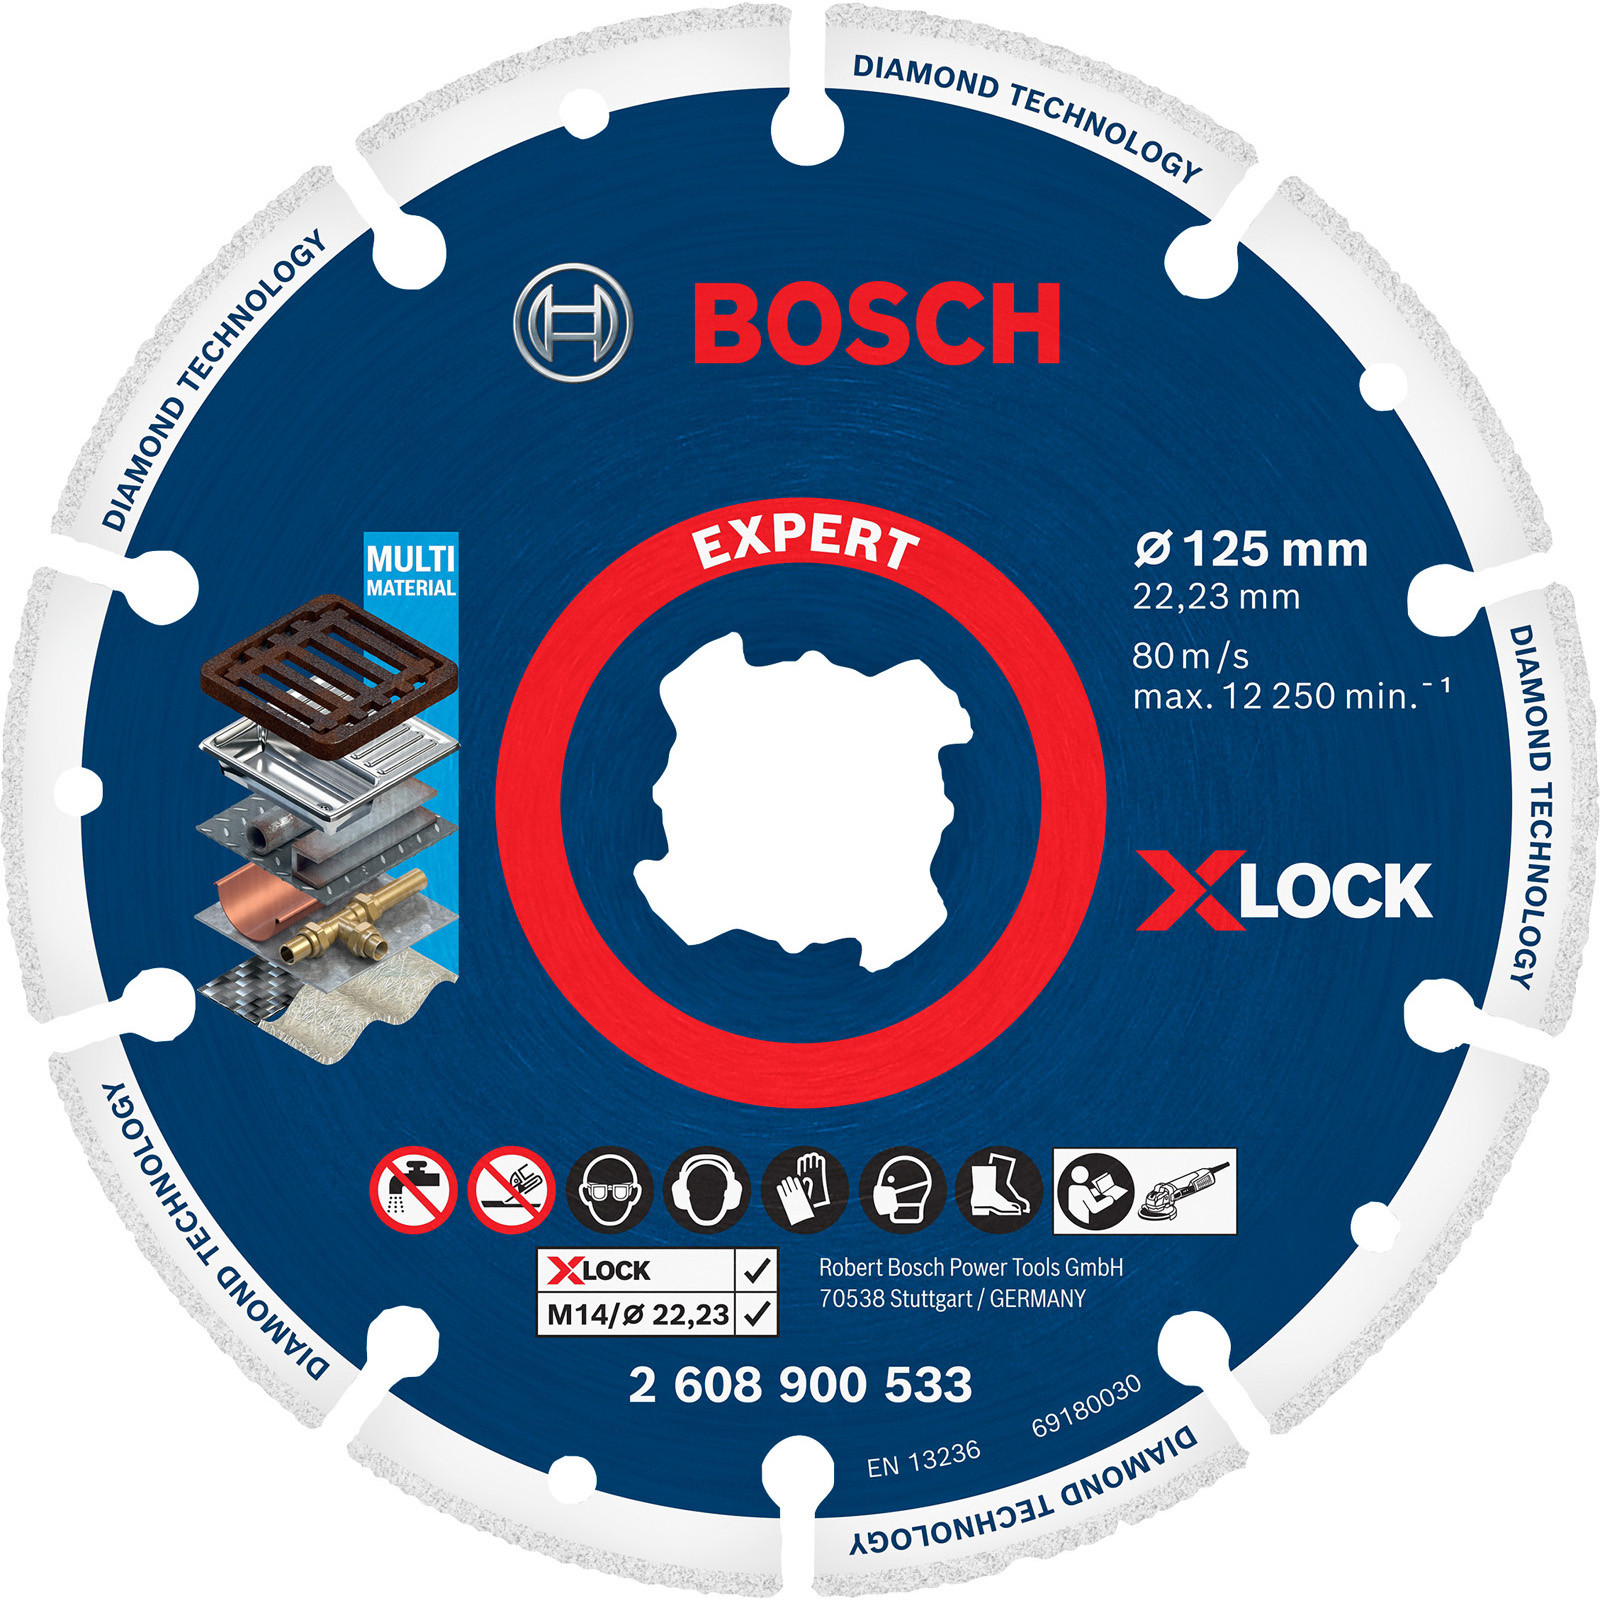 x Wheel Expert Trennscheibe 2608900533 Bosch Werkzeugstore24 Metal mm 22,23 Diamond bei X-LOCK - 125